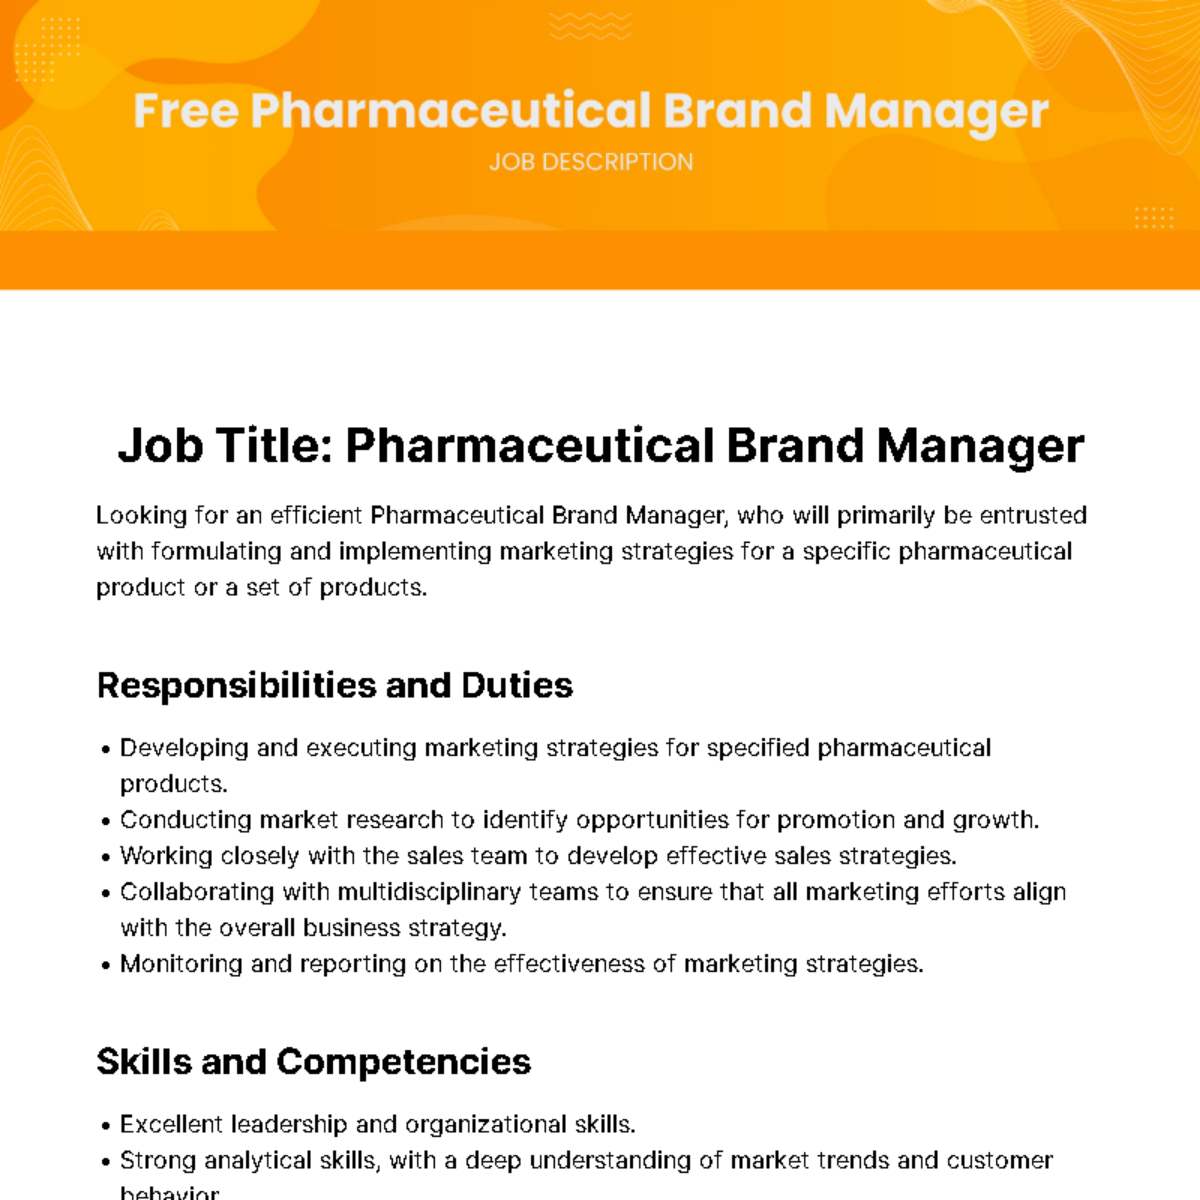 Free Pharmaceutical Brand Manager Job Description Template